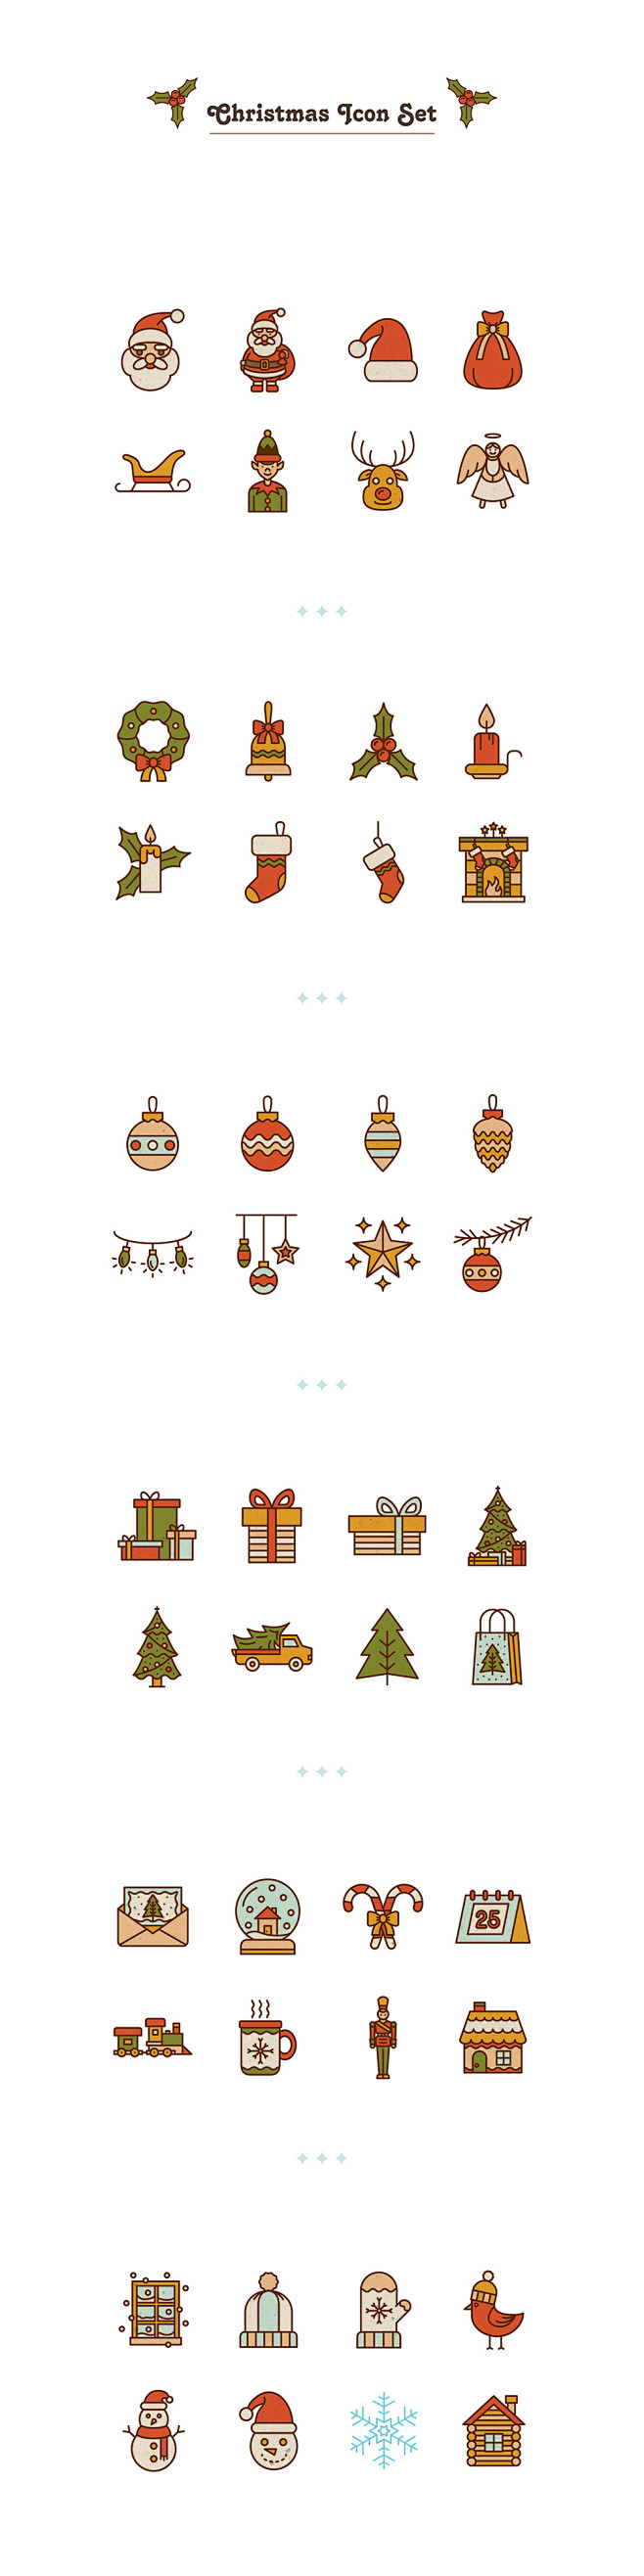 Free Christmas Icons...